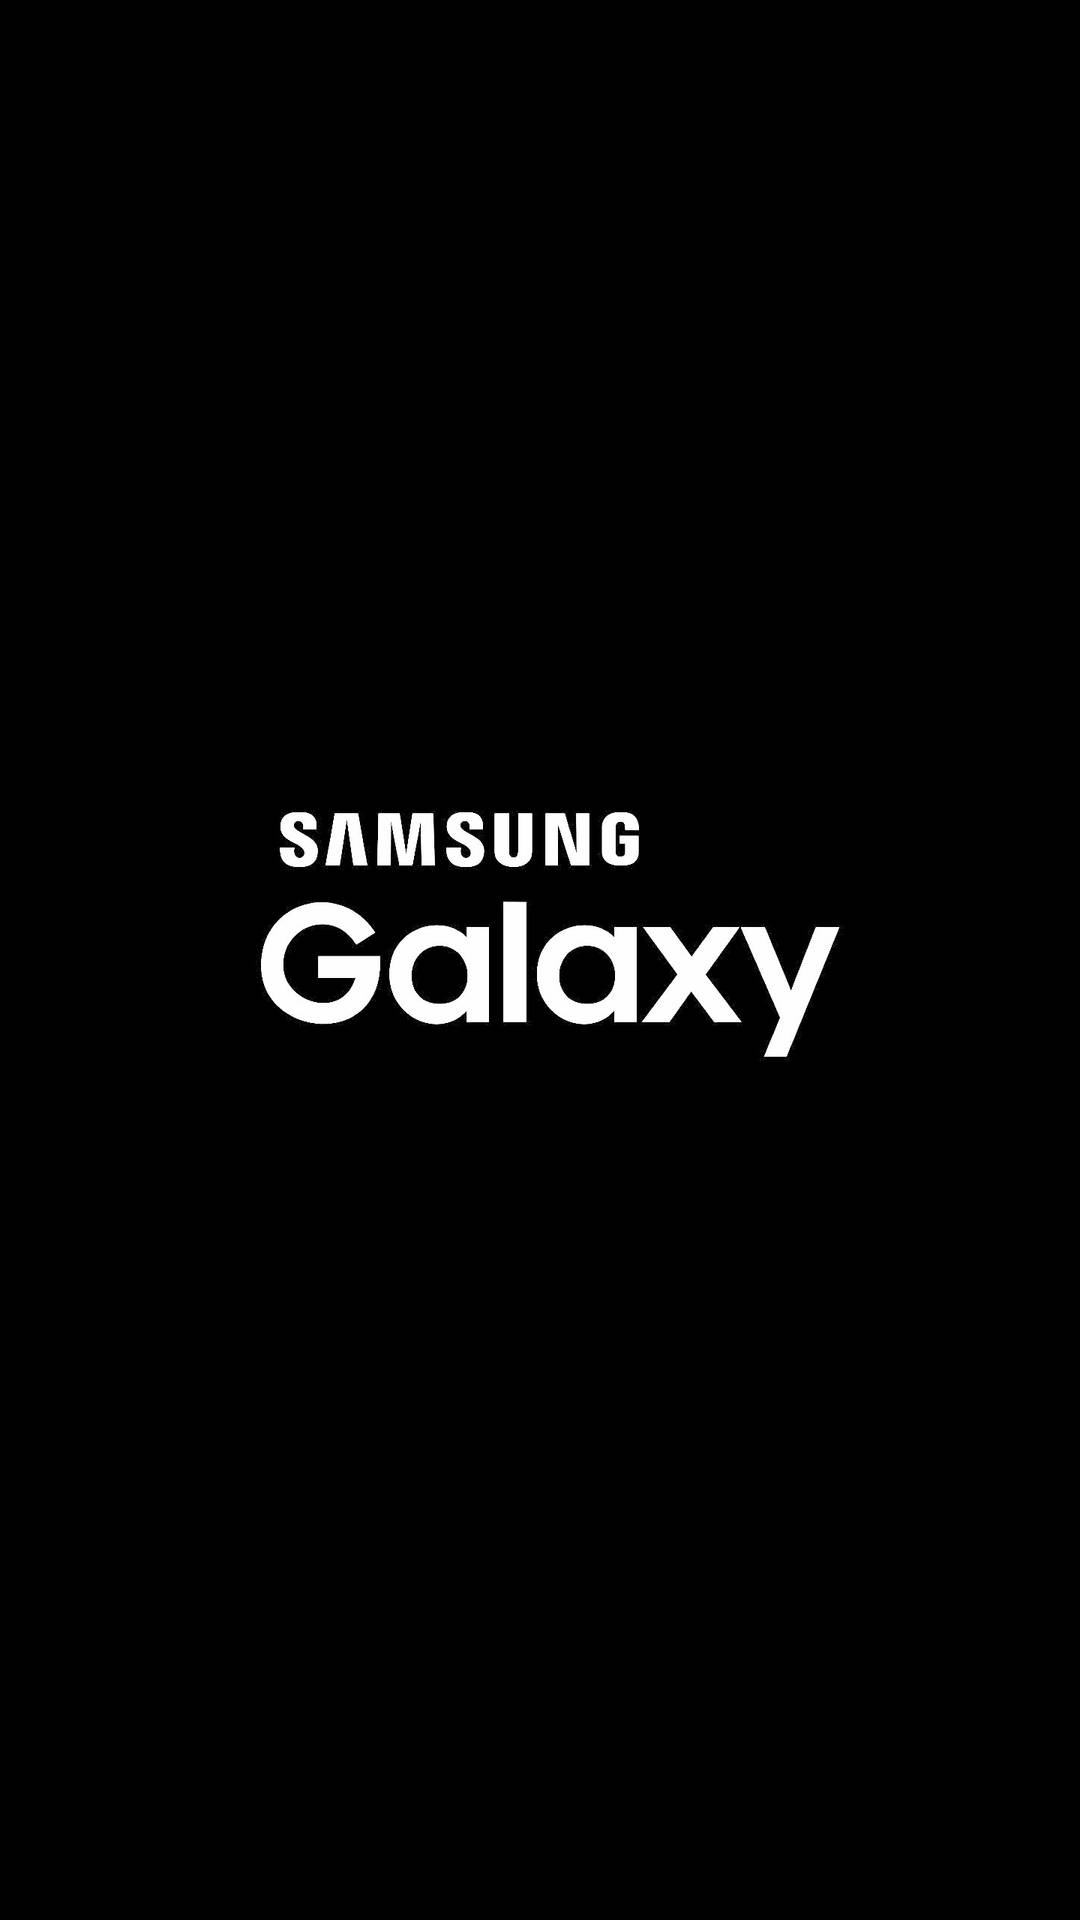 Samsung Galaxy Black And White Logo Background